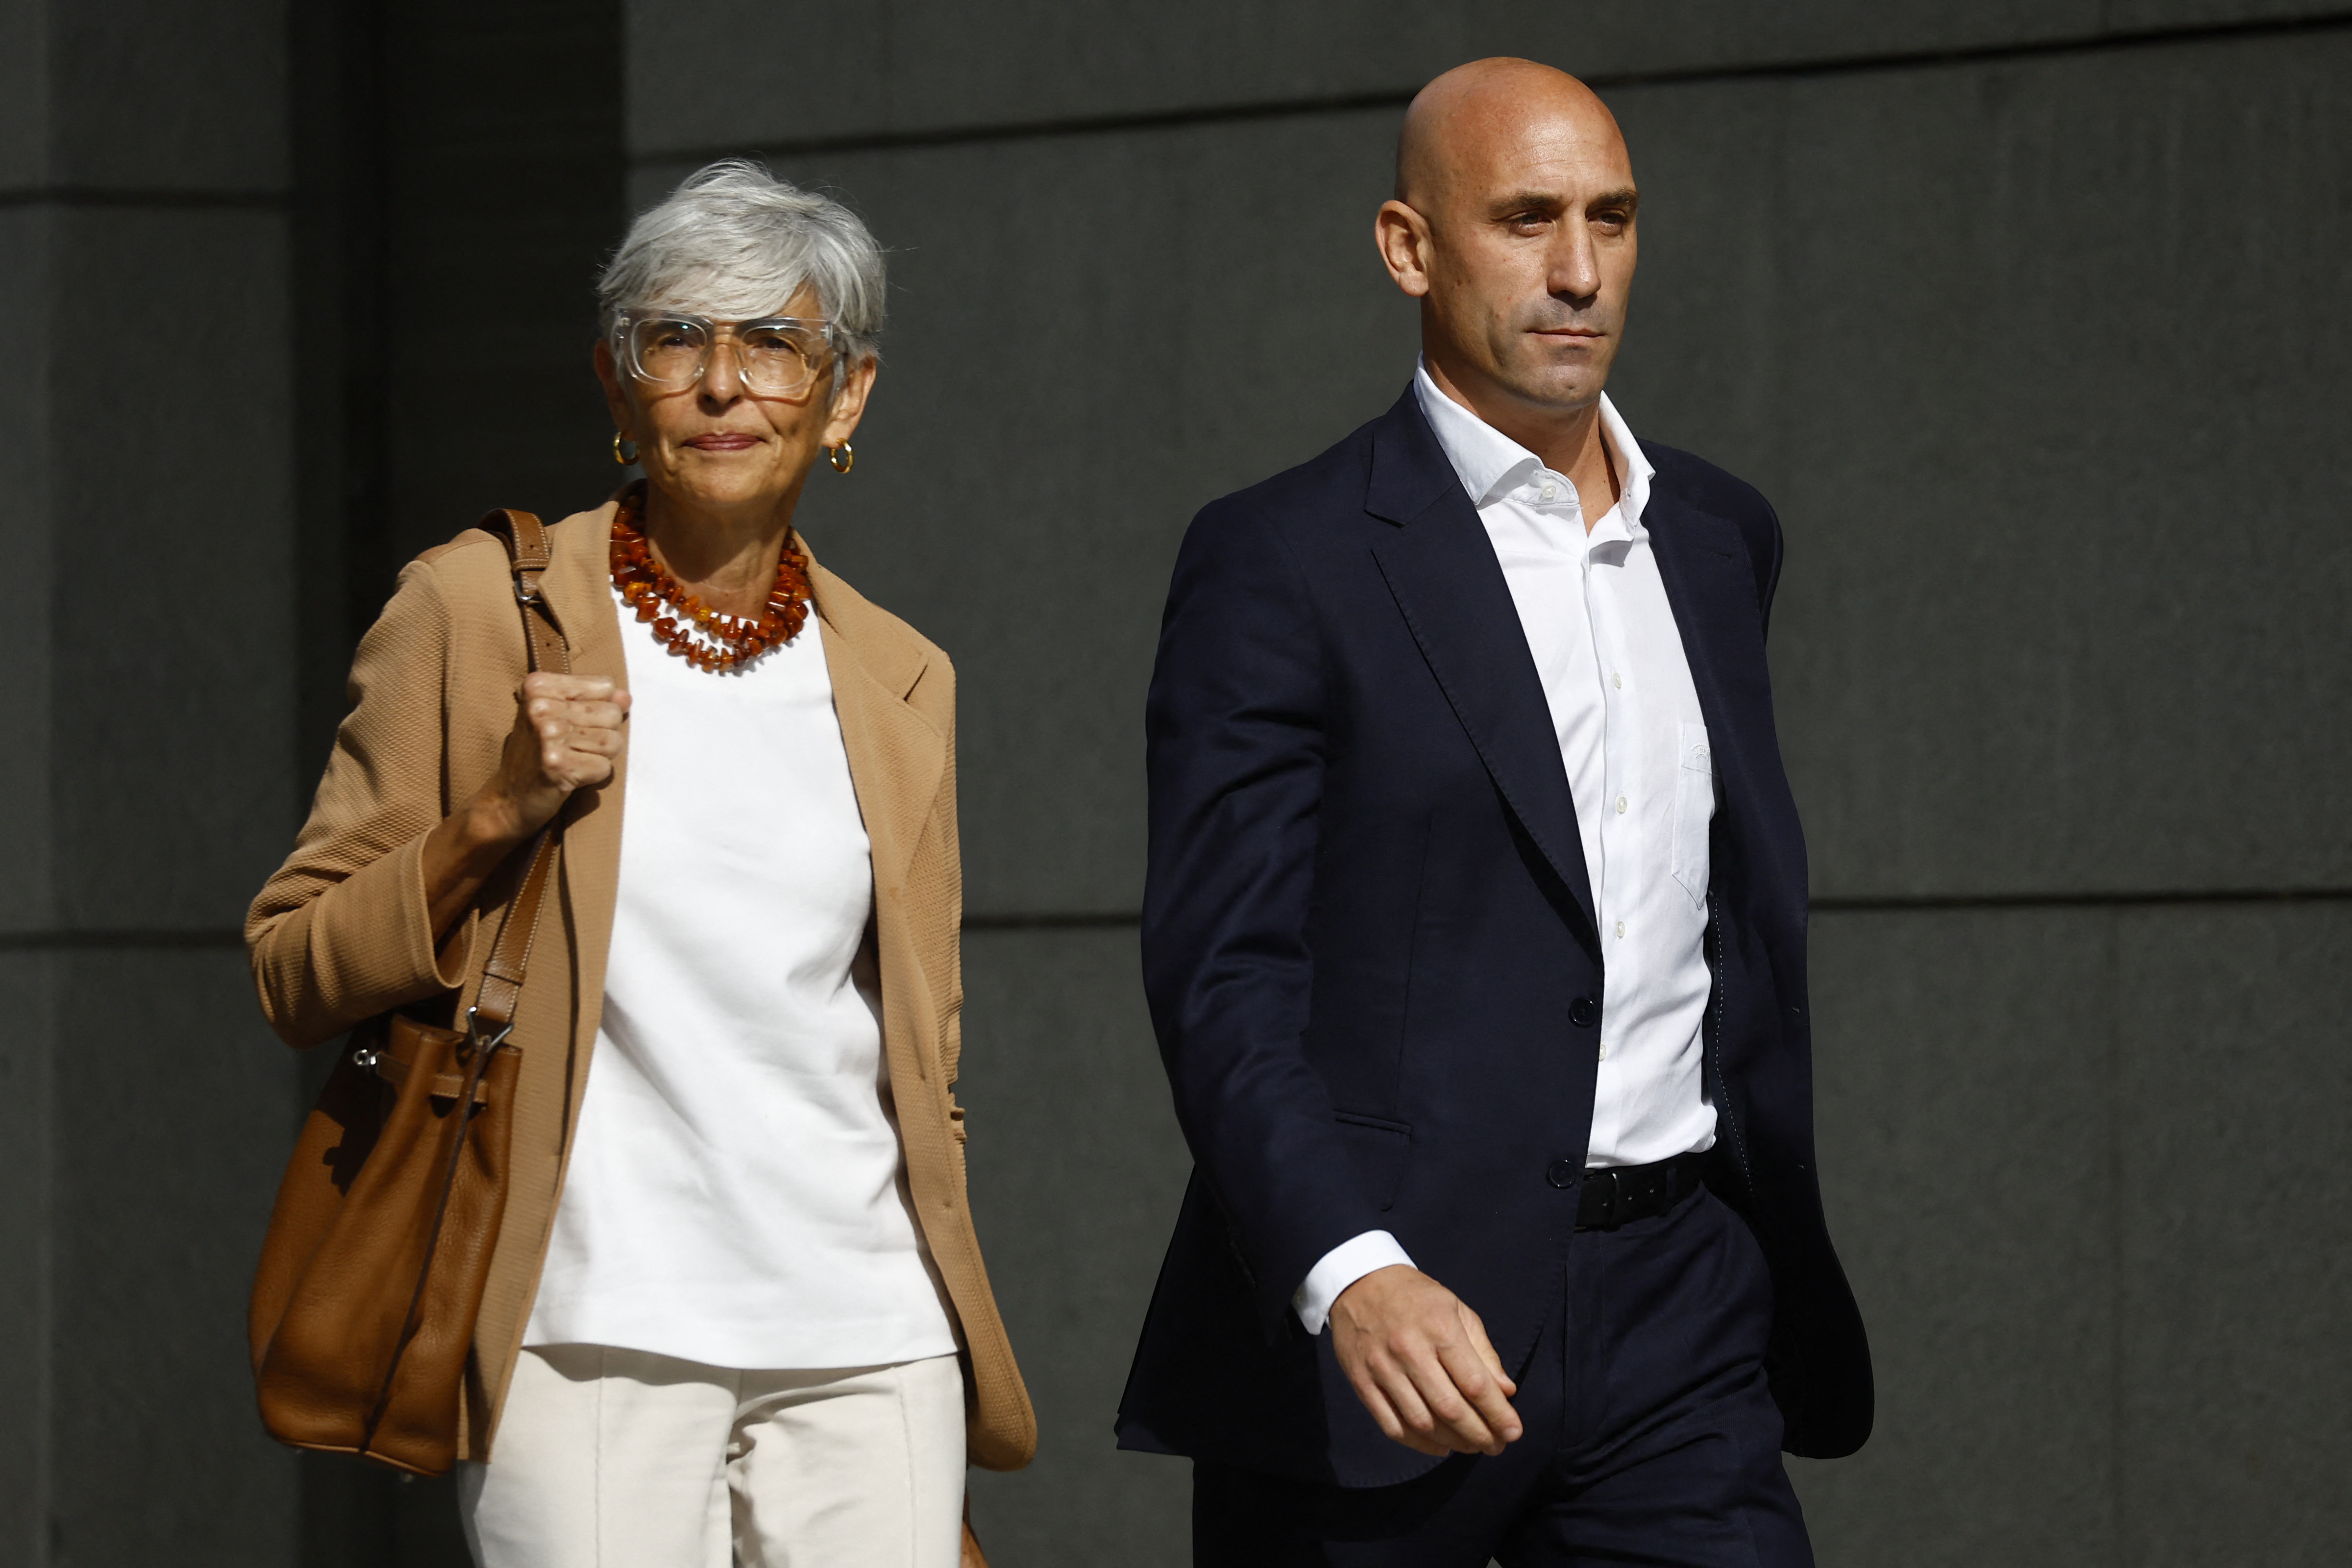 Restraining order imposed on ex-Spain soccer boss as he testifies in assault probe Reuters